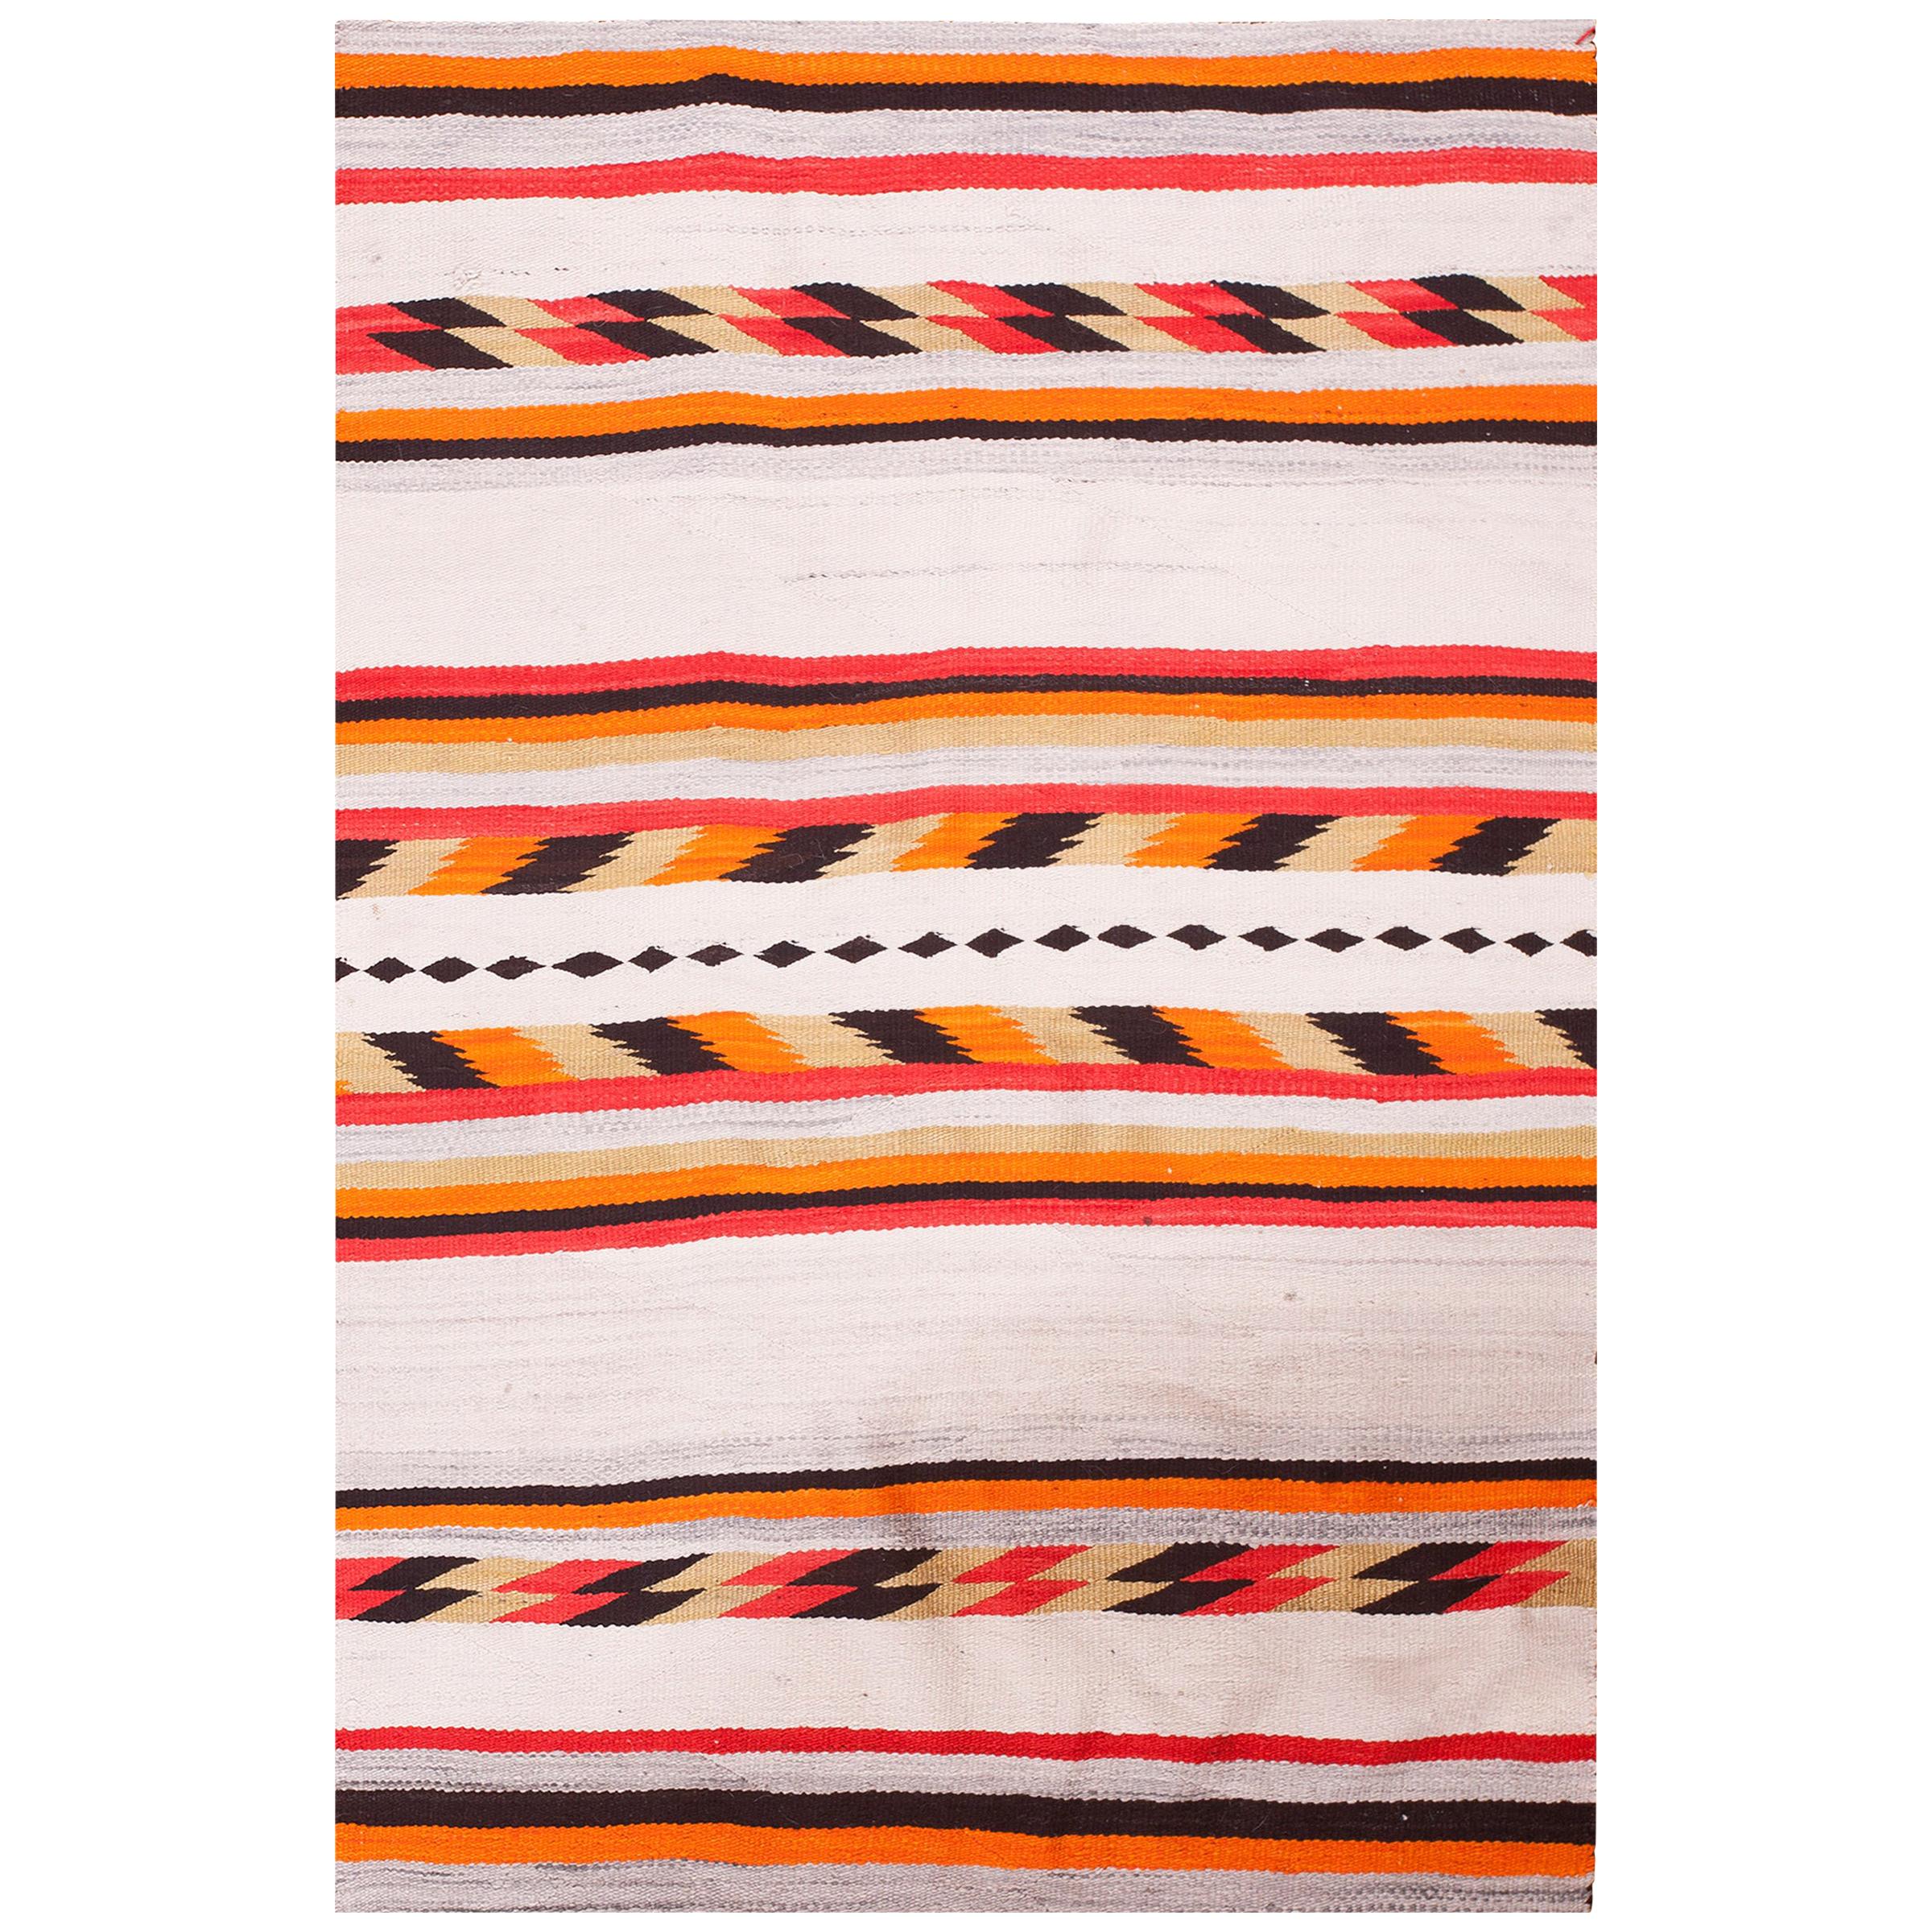 Early 20th Century American Navajo Carpet ( 4'2" x 6'2" - 127 x 188 )